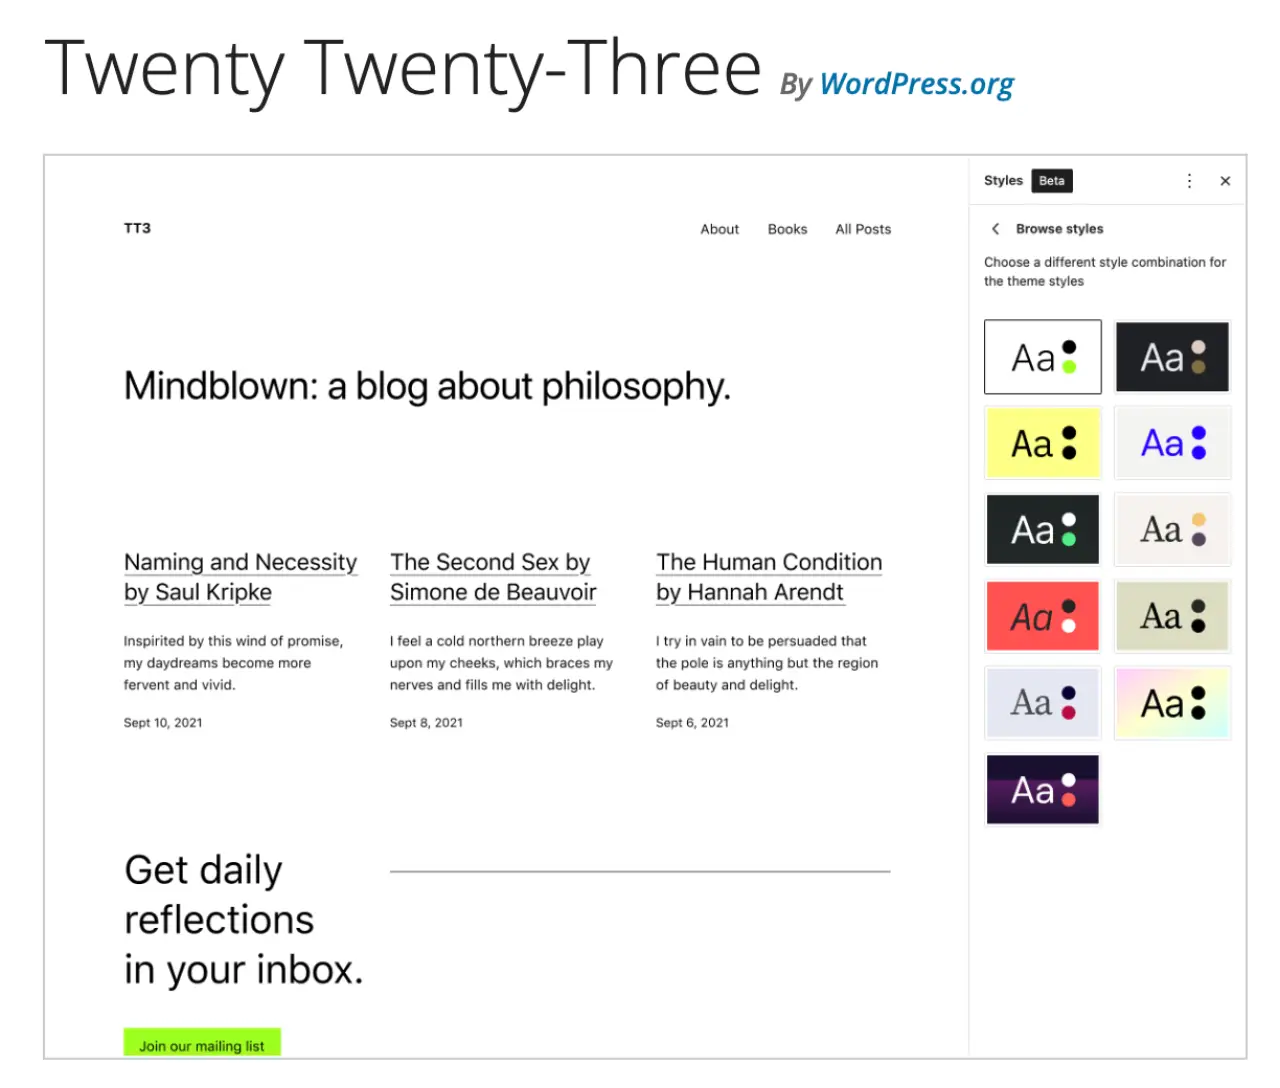 The screenshot of the The WordPress Twenty Twenty-Three theme